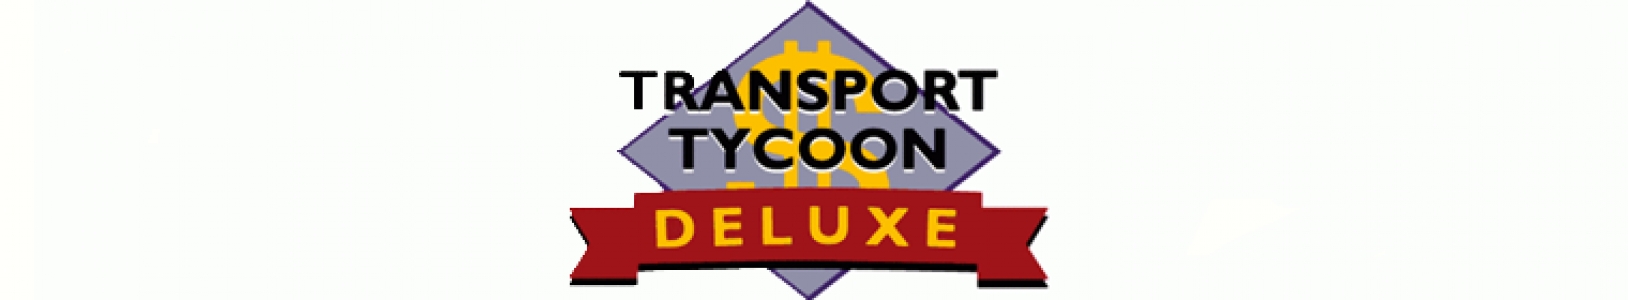 Transport Tycoon Deluxe banner